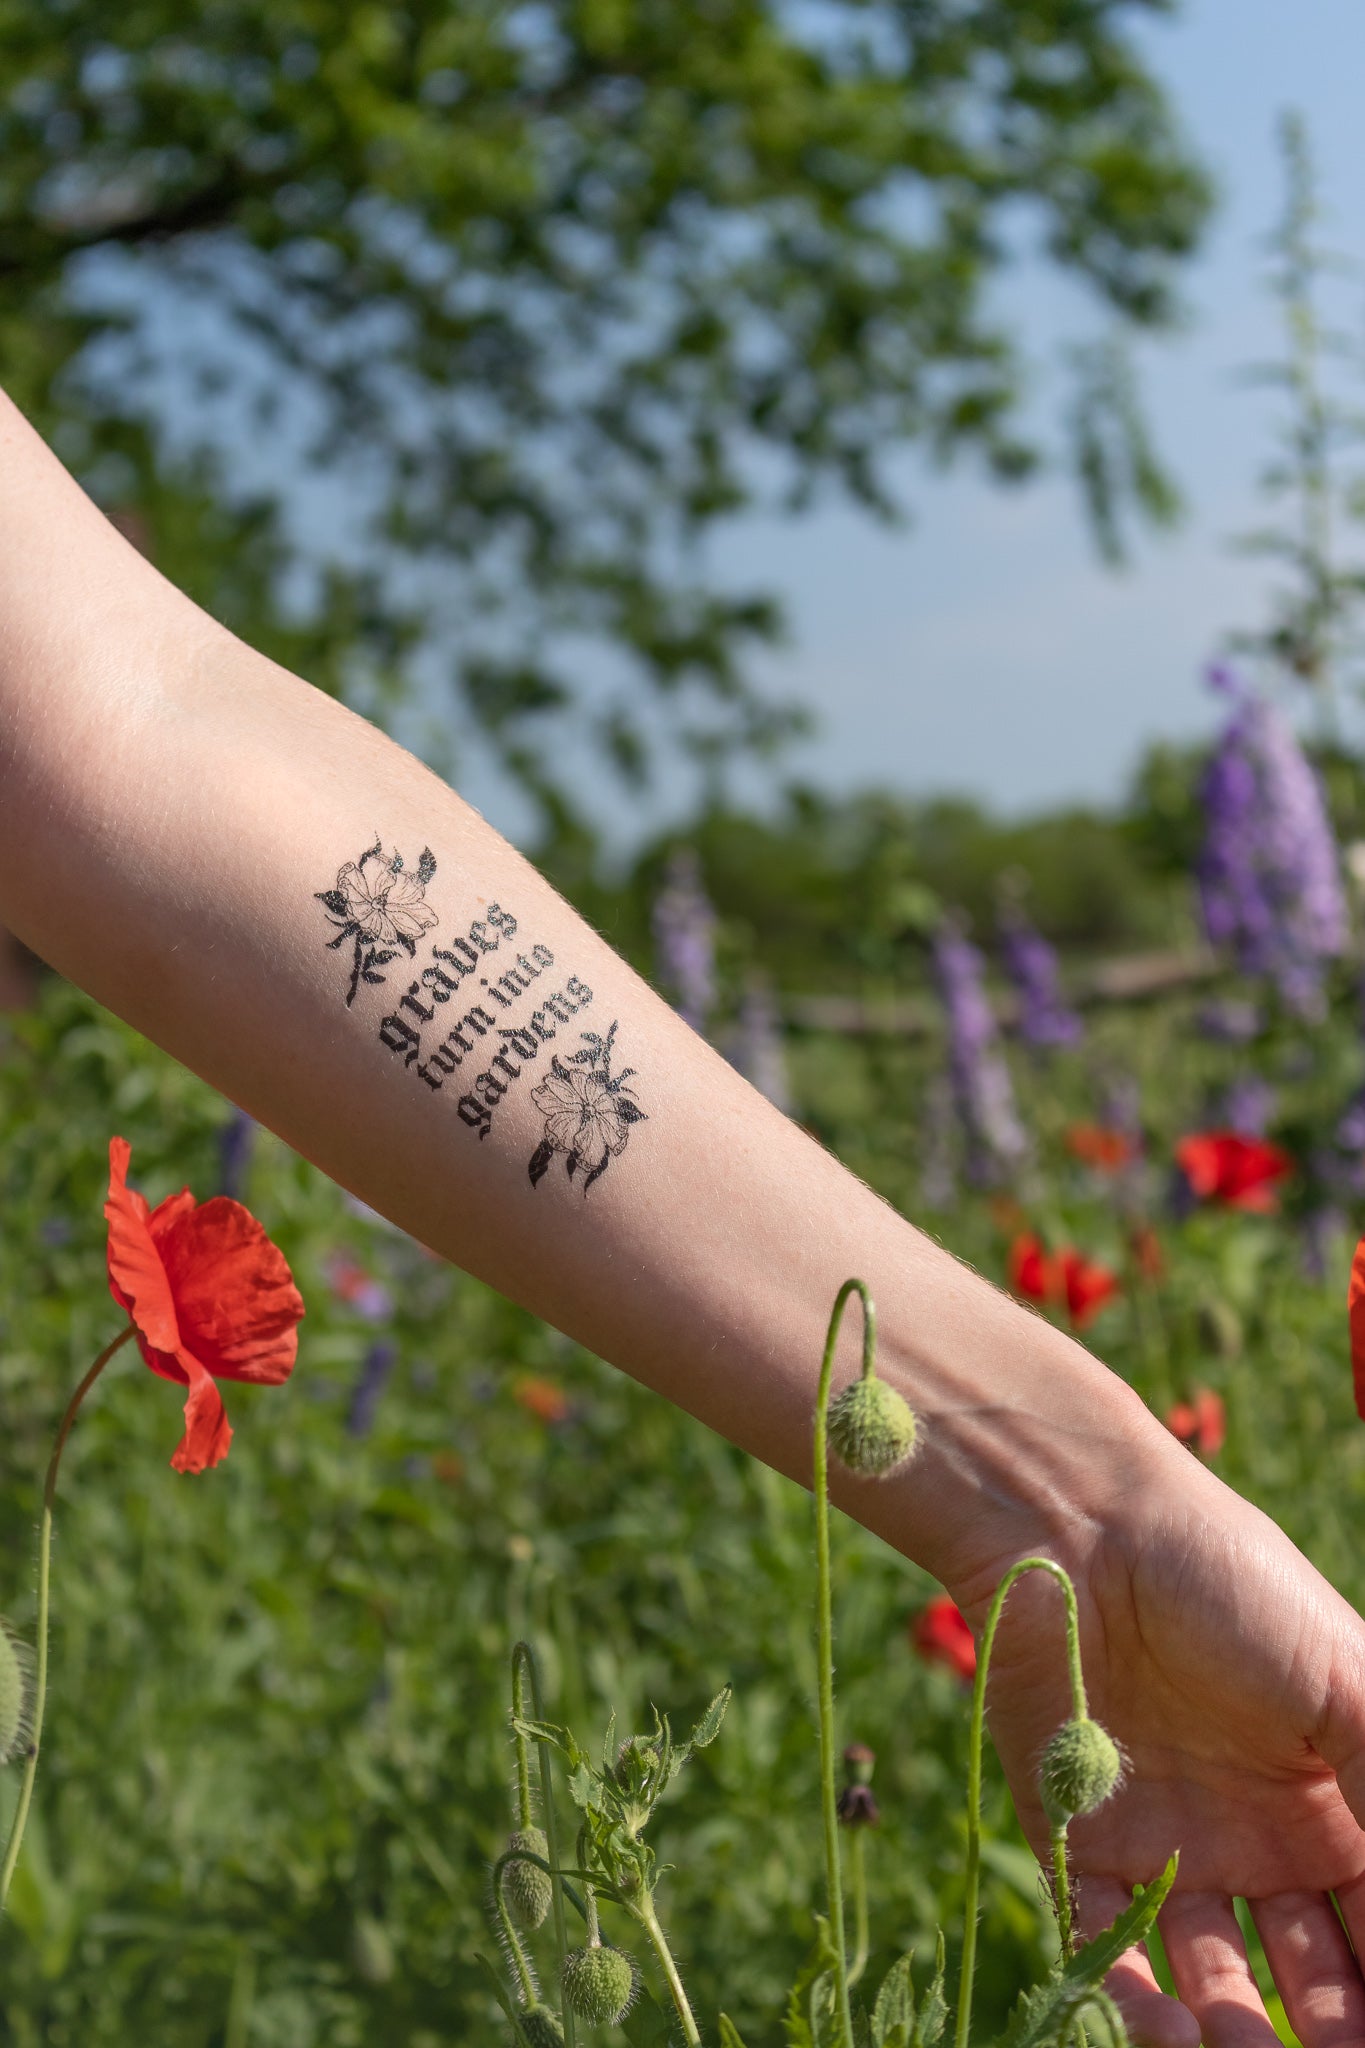 50 Beautiful Rose Thigh Tattoo Designs